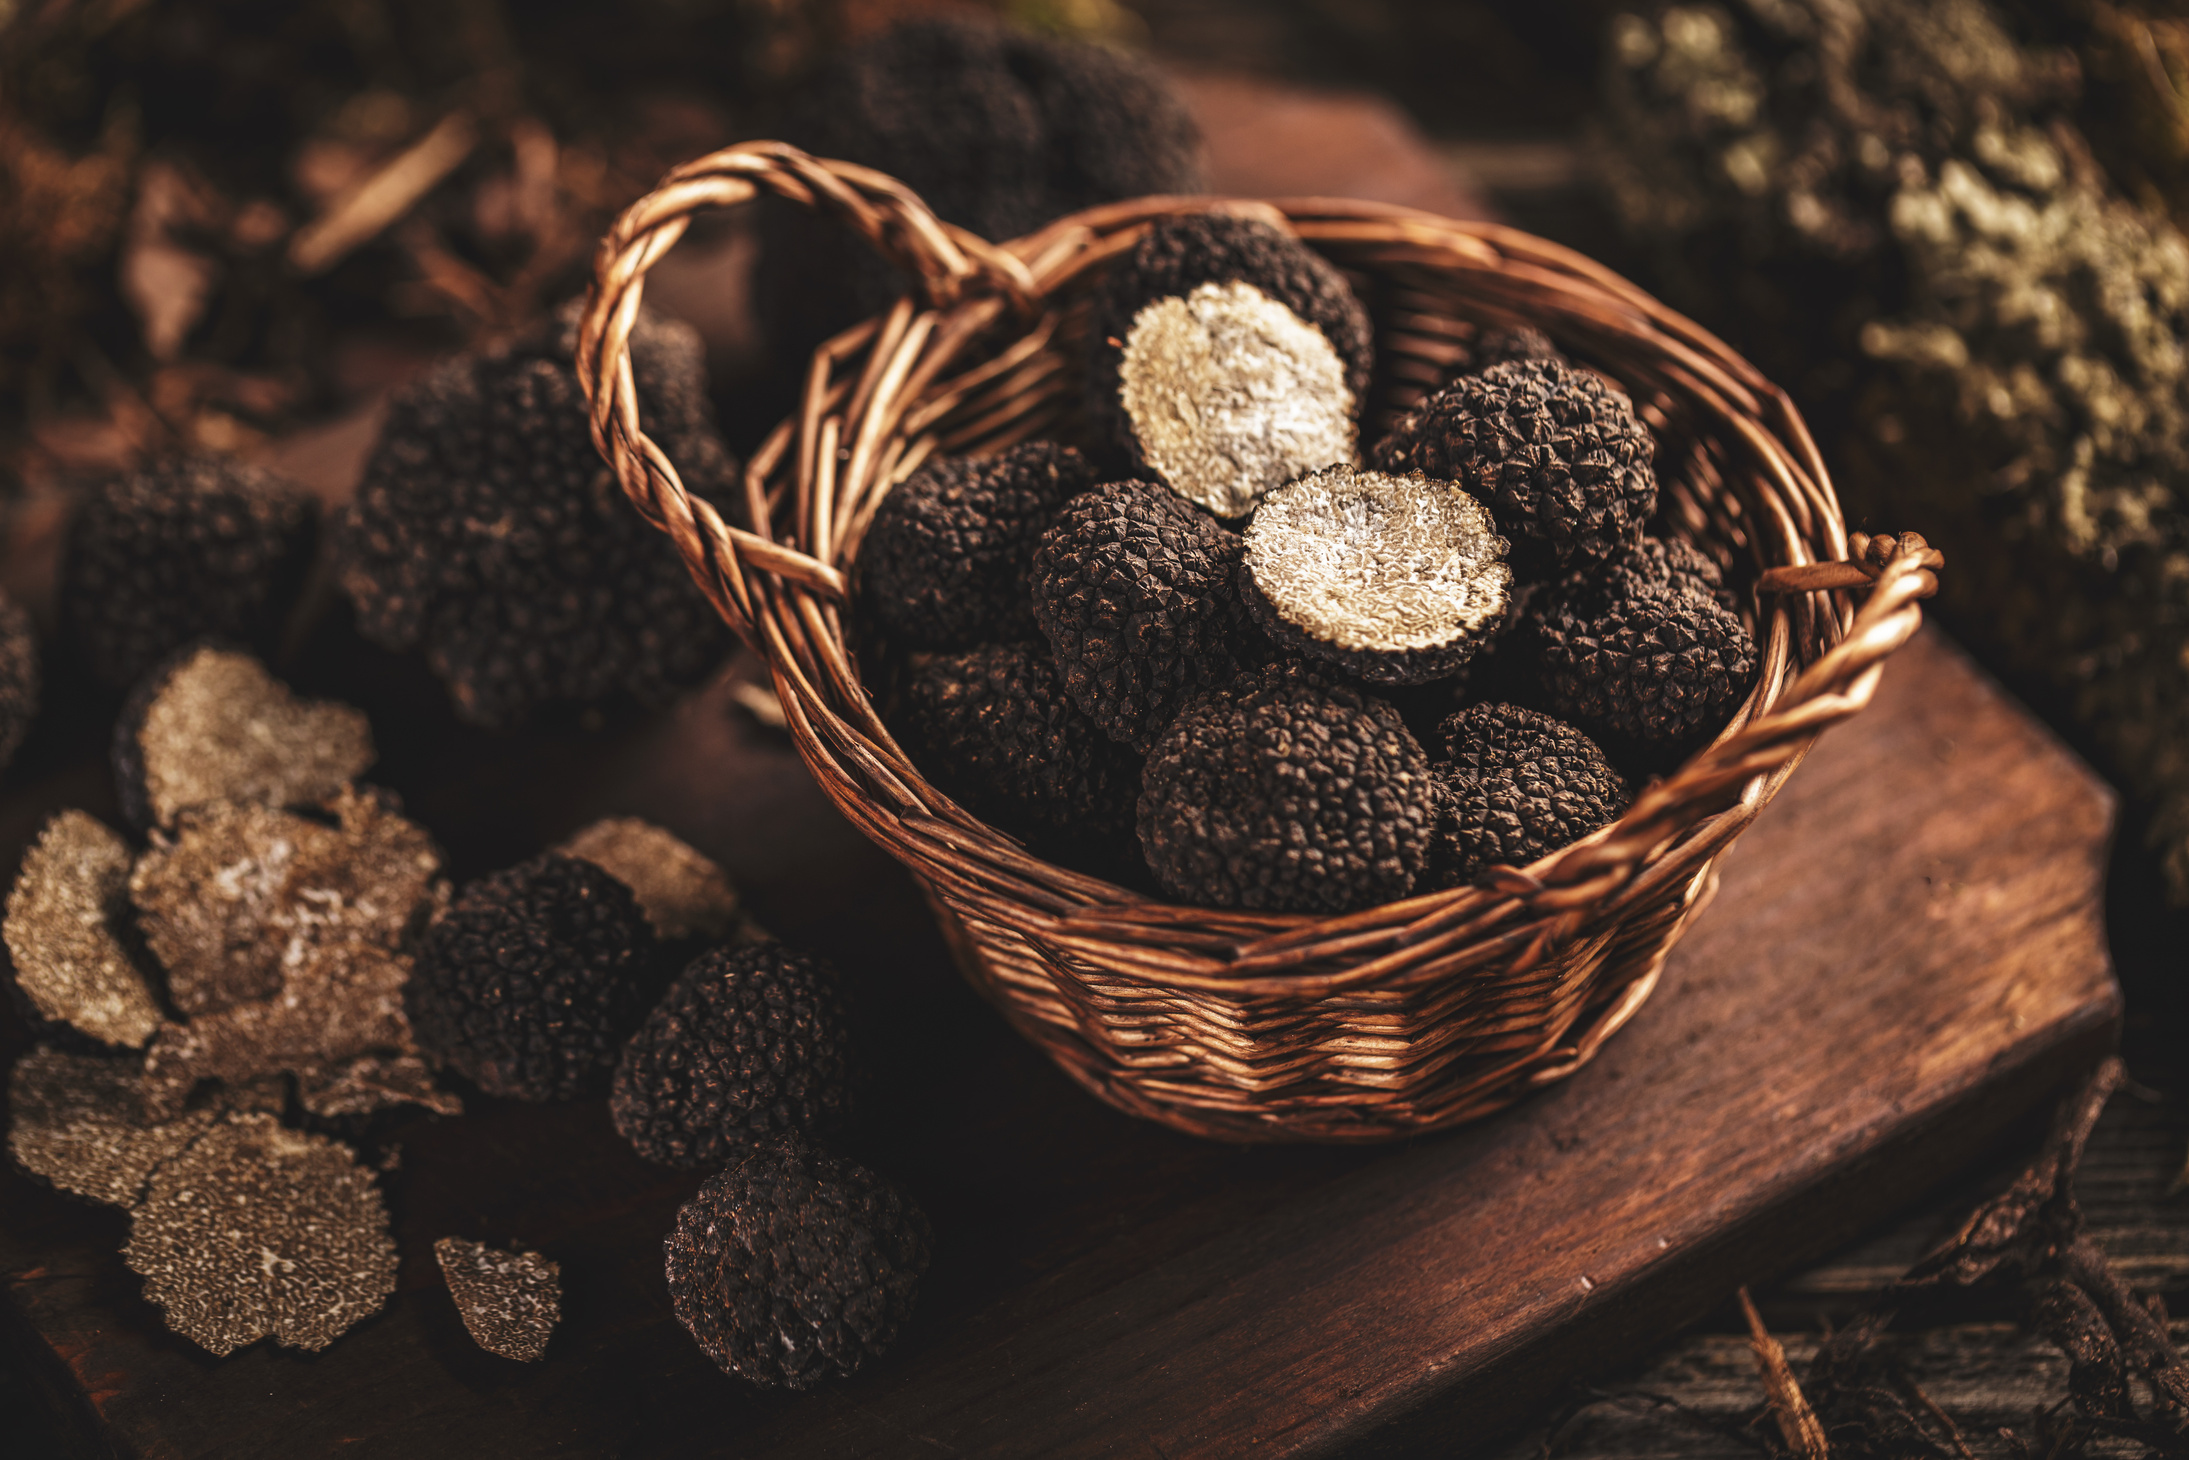 Black truffle mushrooms